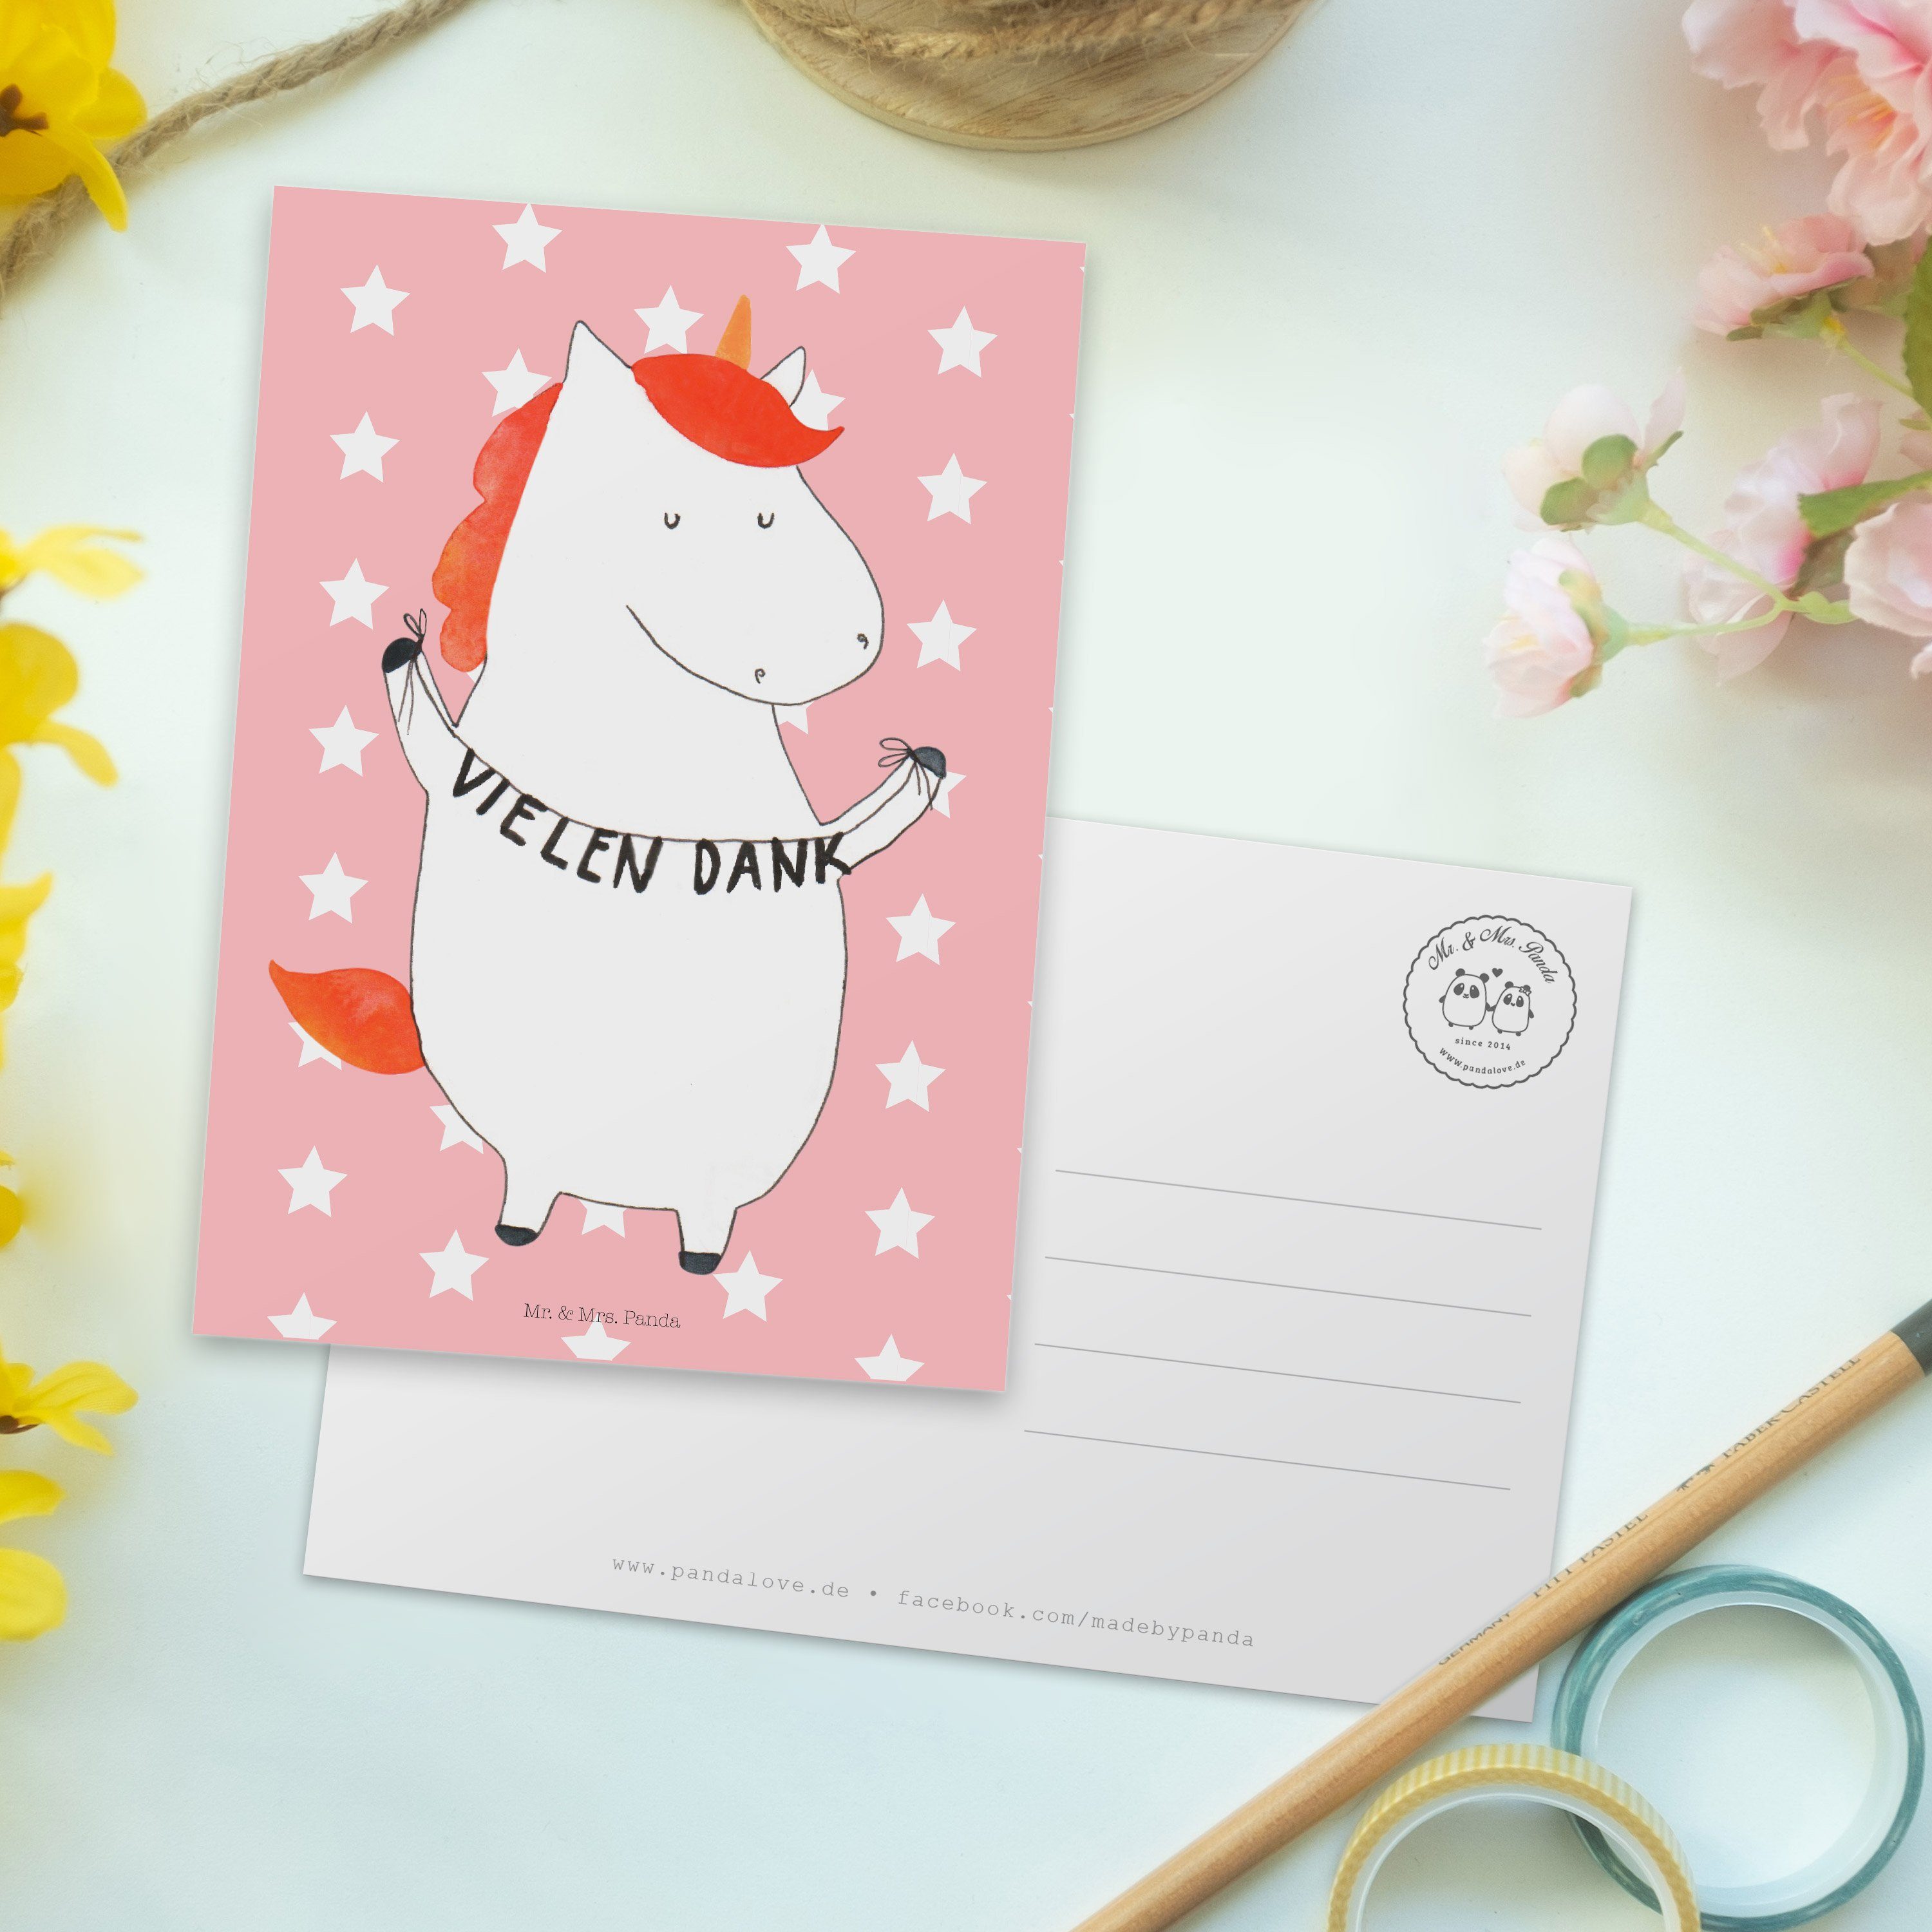 Mr. & Mrs. - Vielen K - Pastell Dank Geschenk, Rot Unicorn, Einhorn Postkarte Panda Dankeskarte